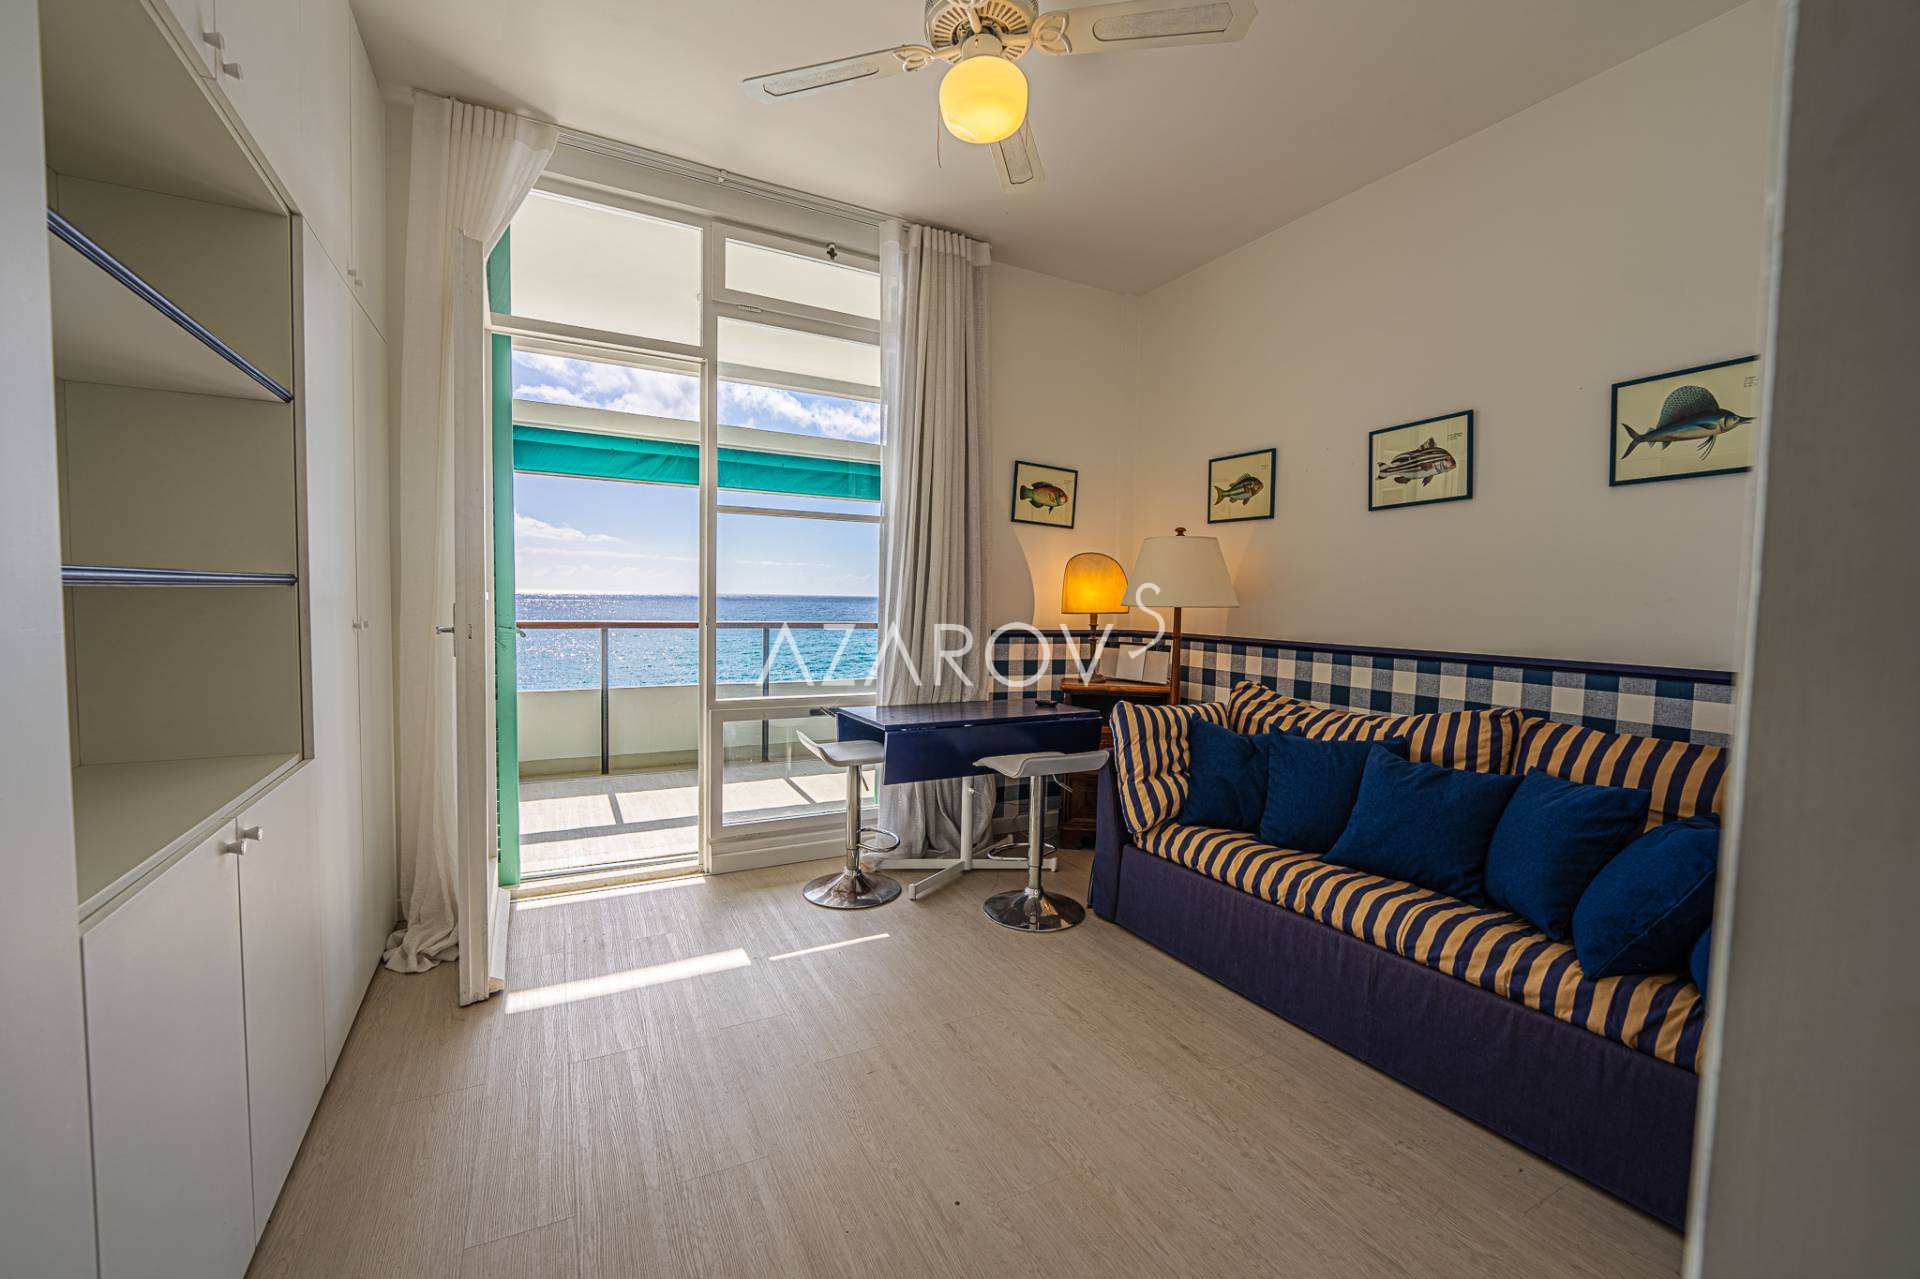 Wohnung in Sanremo in der Nähe des Meeres